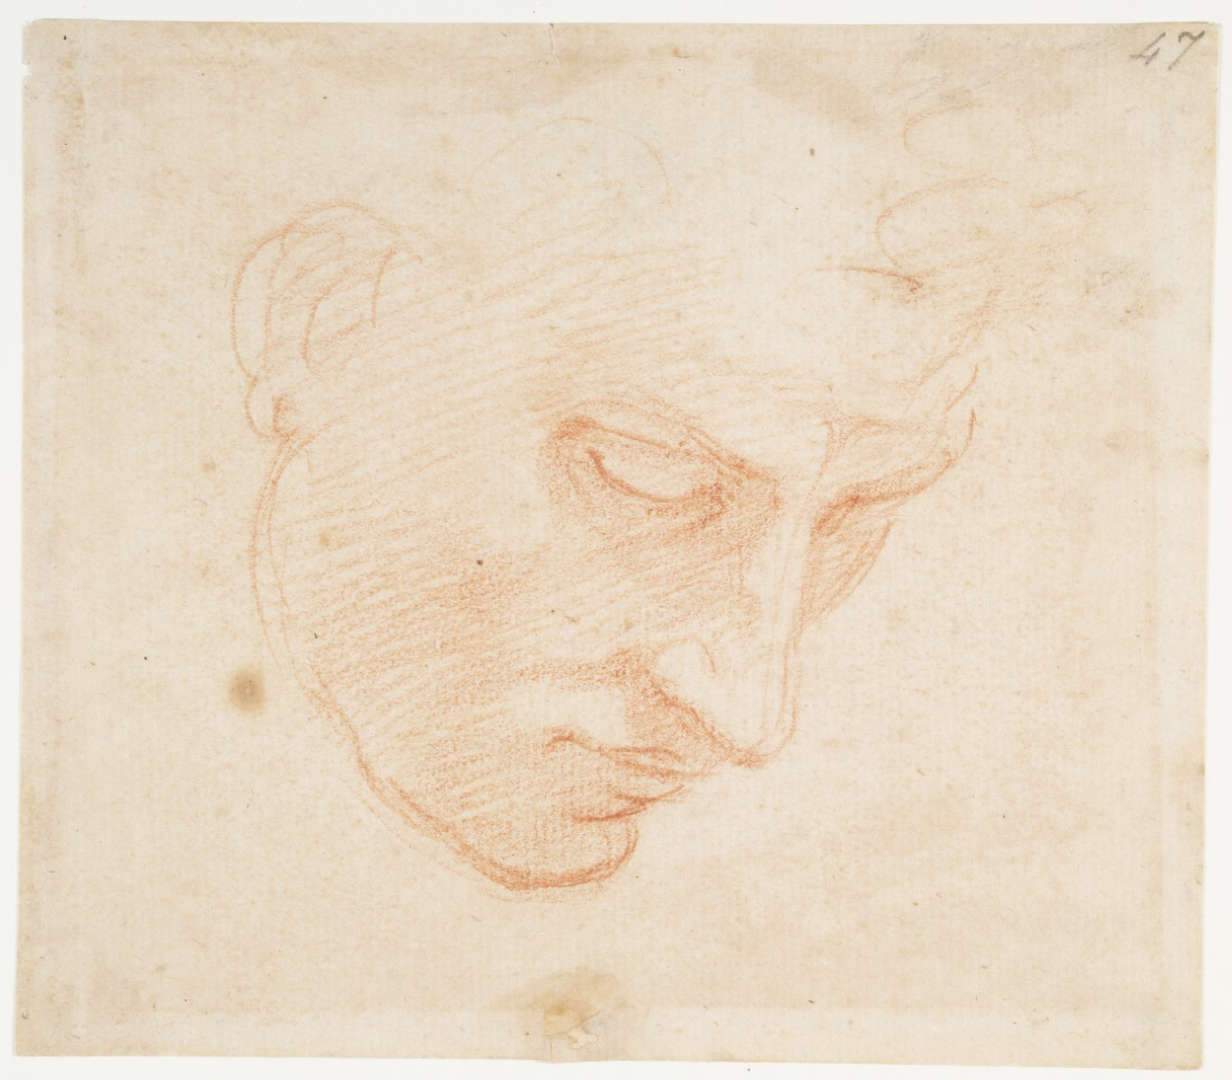 Florence, Casa Buonarroti puts online catalog of Michelangelo's drawings